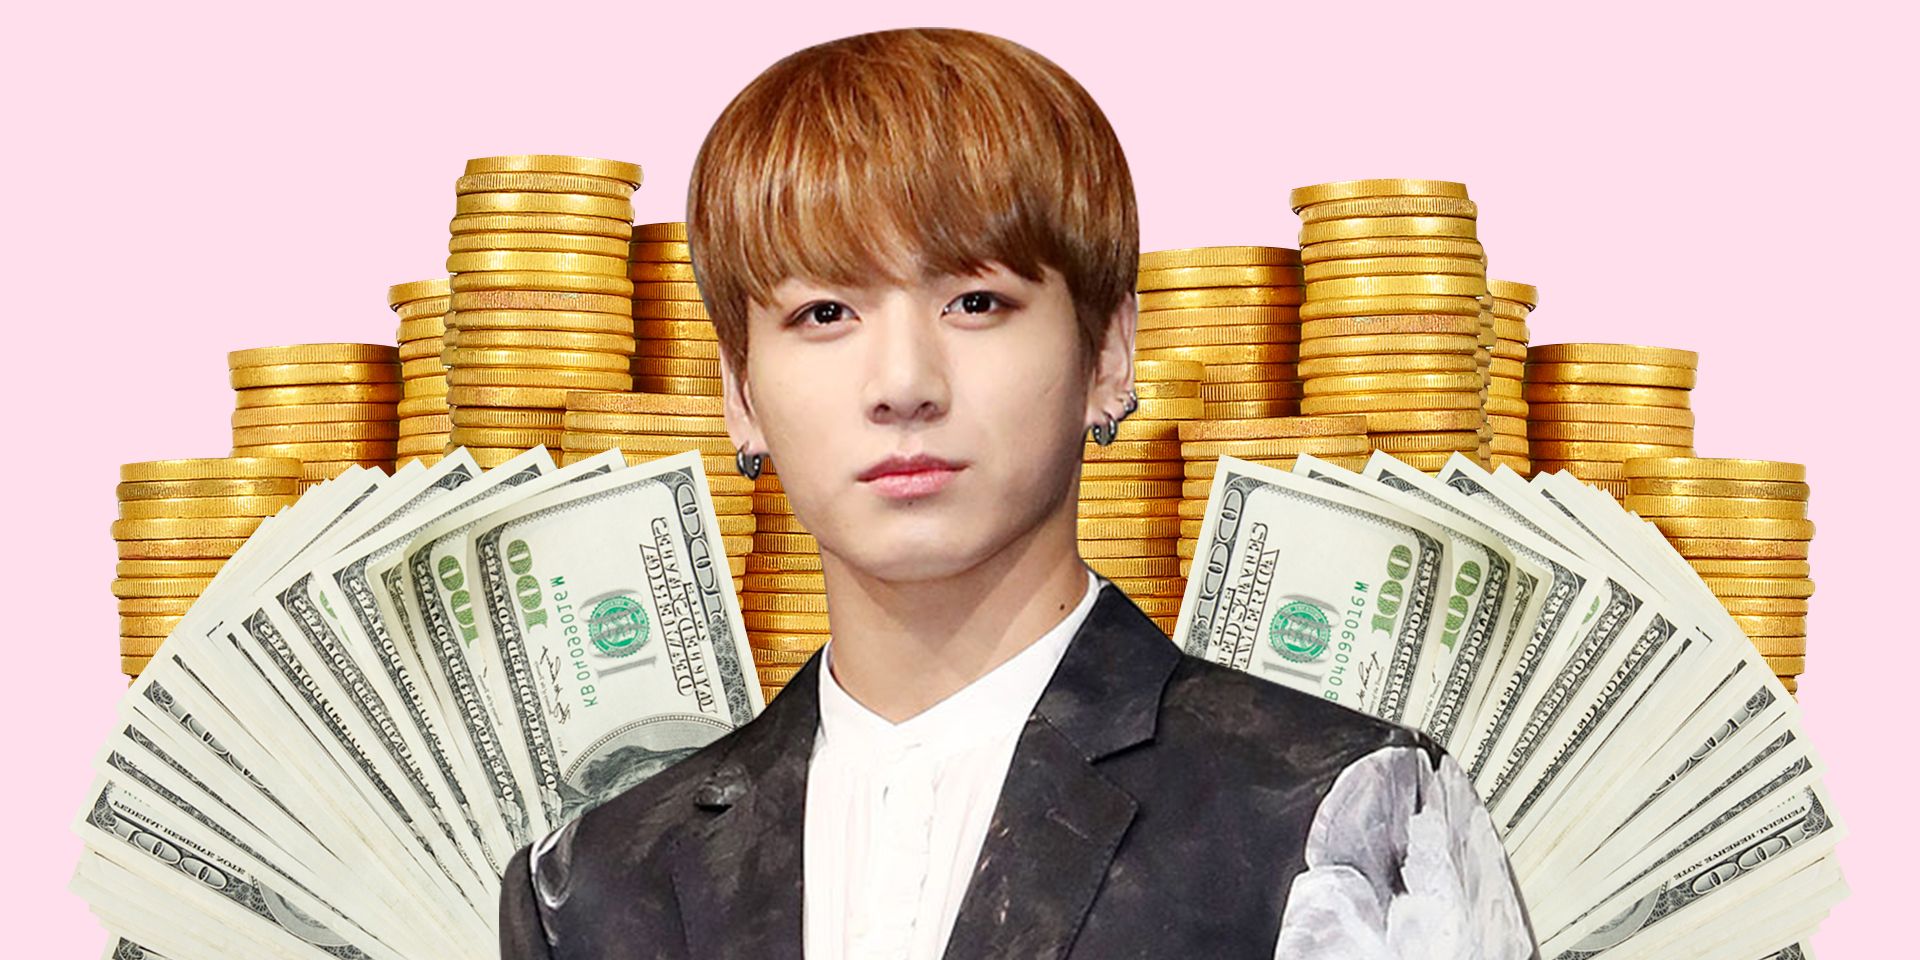 BTS jungkook's net worth in 2022